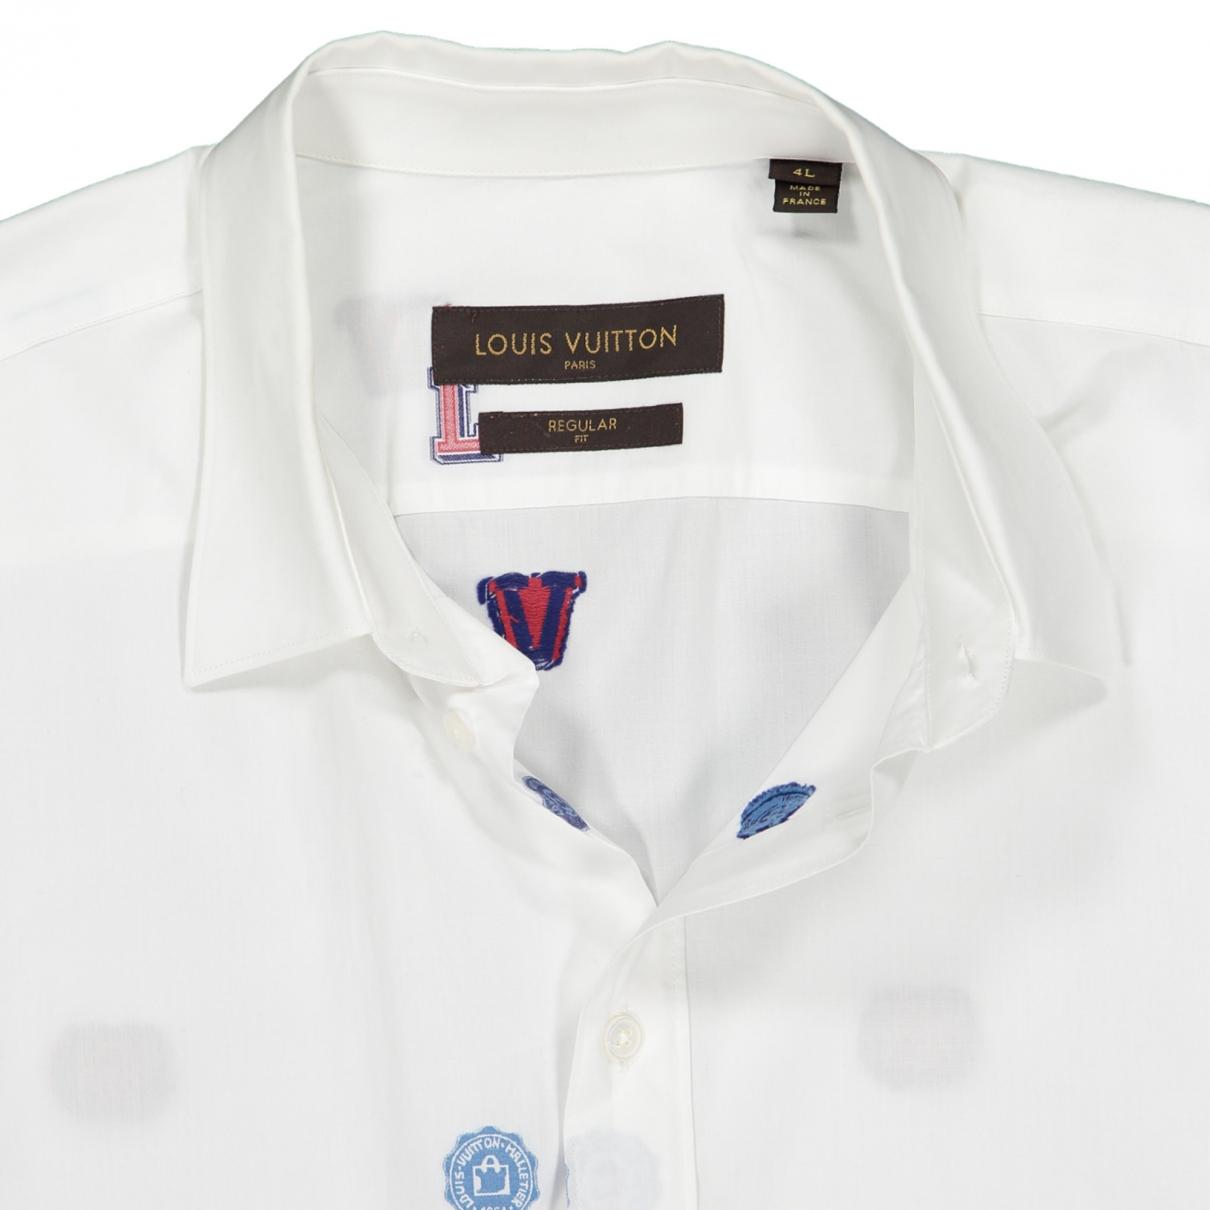 Louis Vuitton White Cotton Shirts in White for Men - Lyst